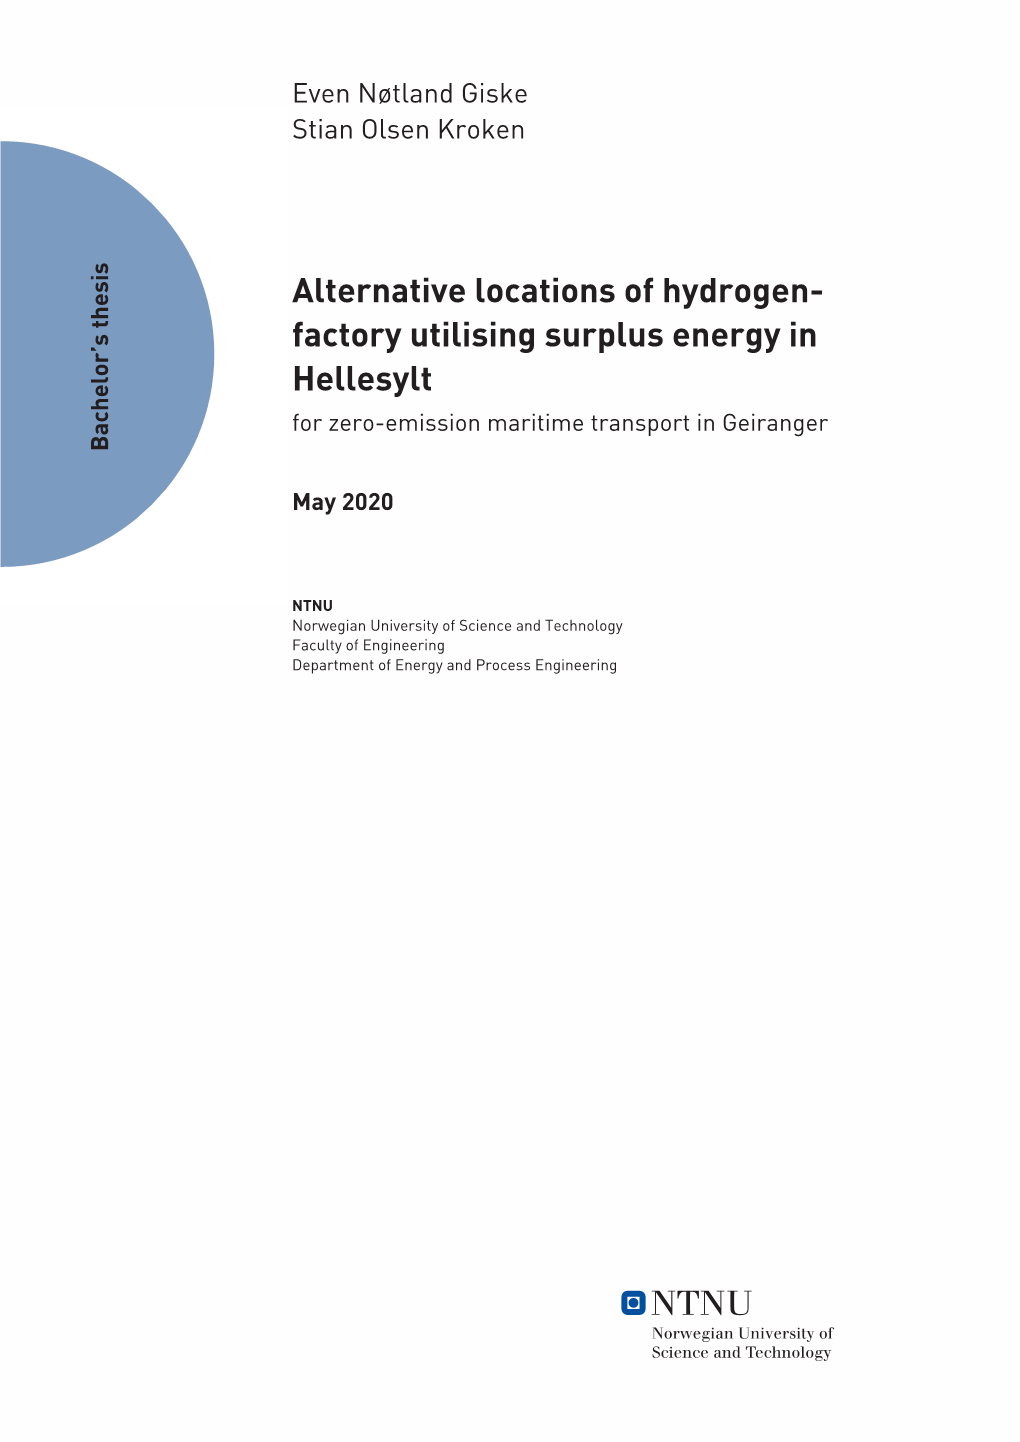 Alternative Locations of Hydrogen- Factory Utilising Surplus Energy in Hellesylt for Zero-Emission Maritime Transport in Geiranger